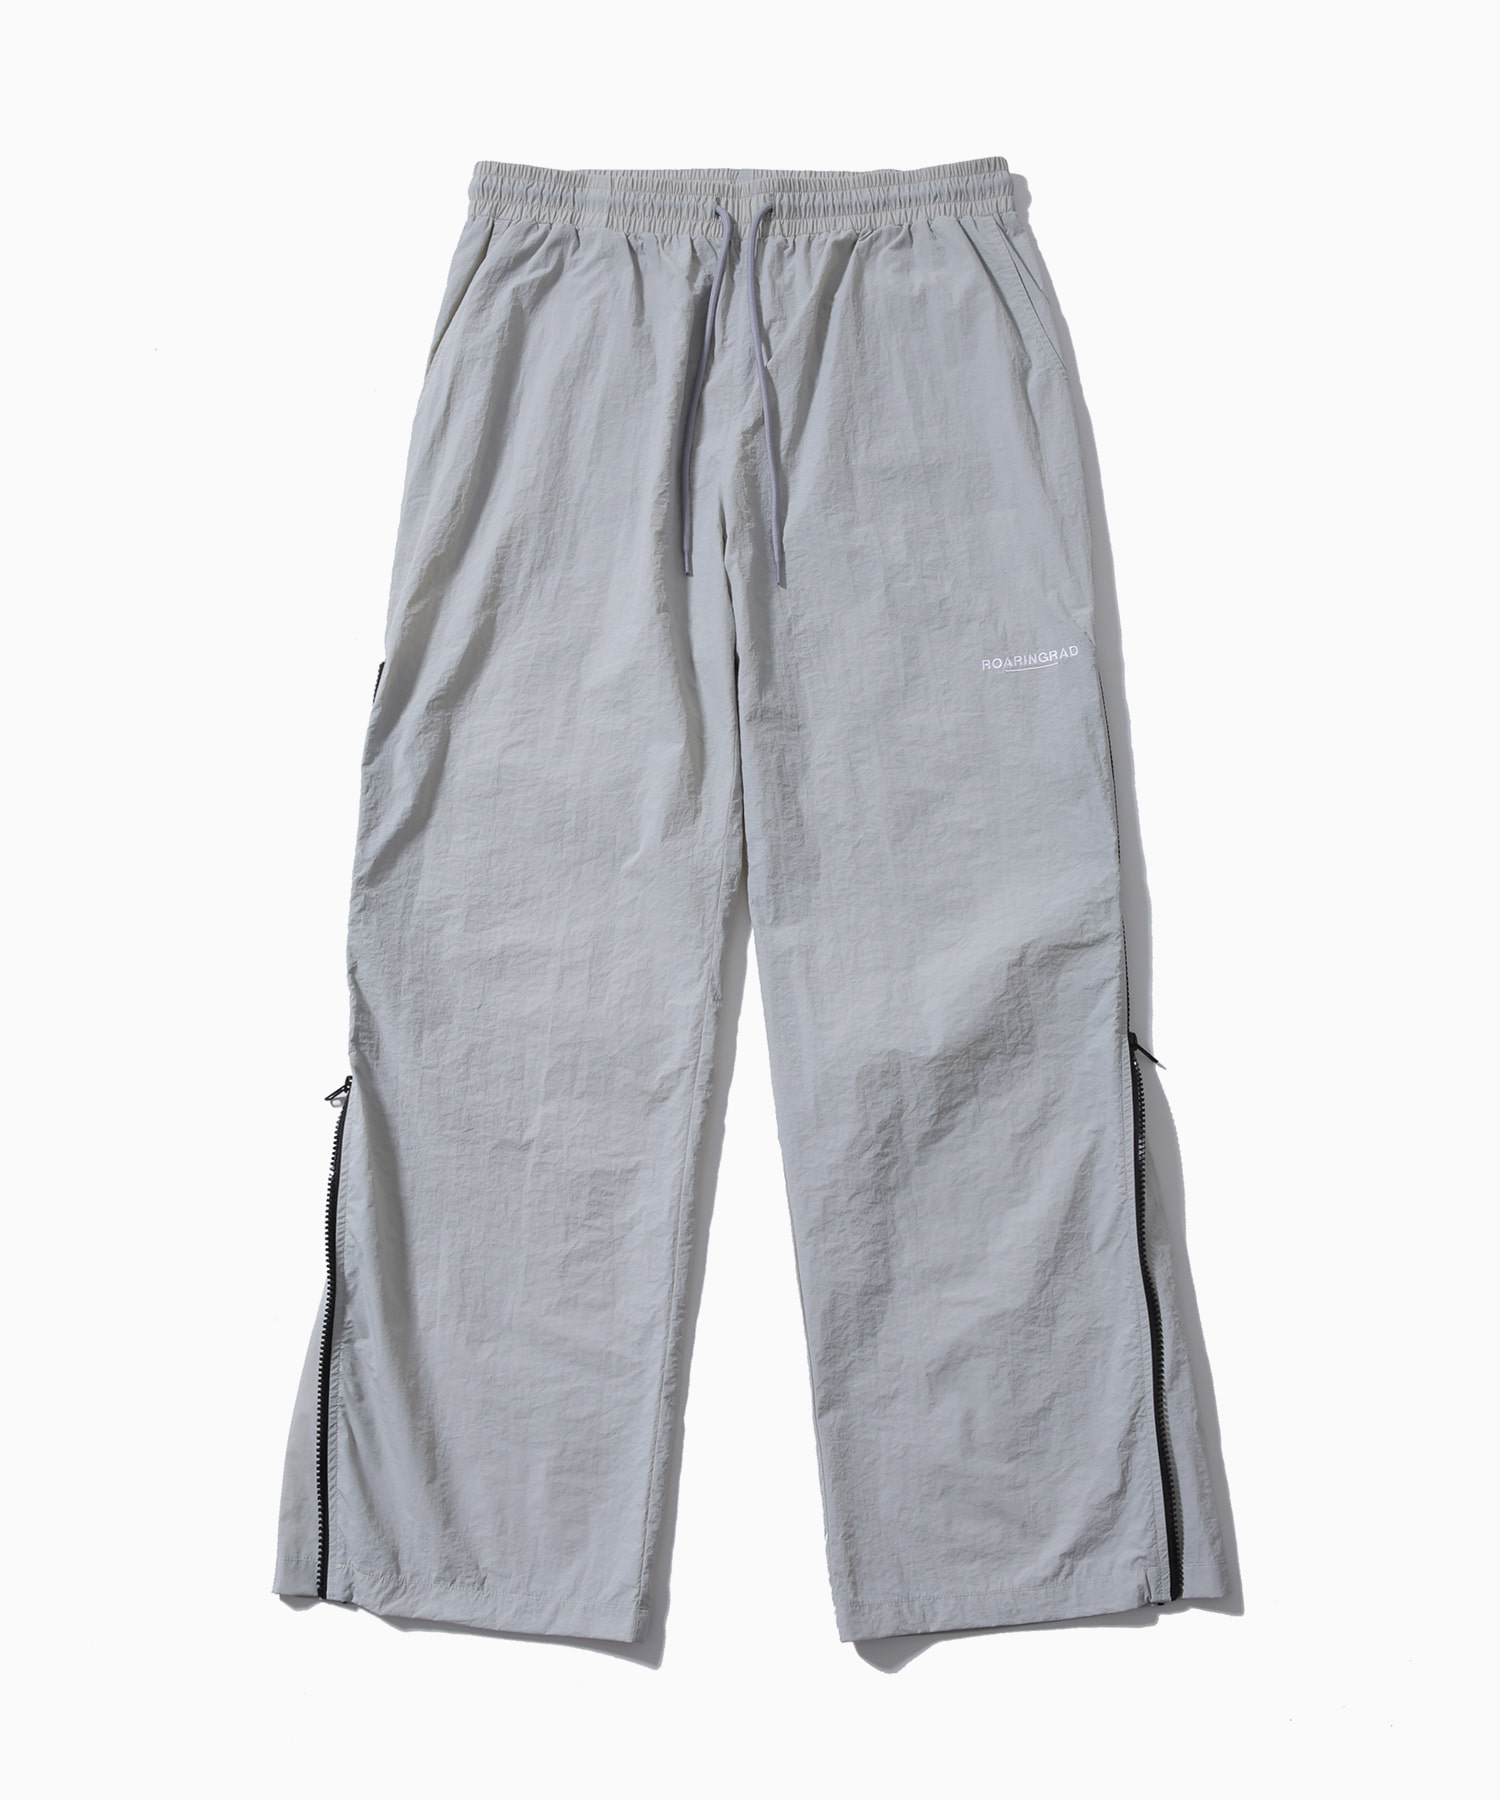 side zipper nylon pants light gray - 로어링라드(ROARINGRAD)